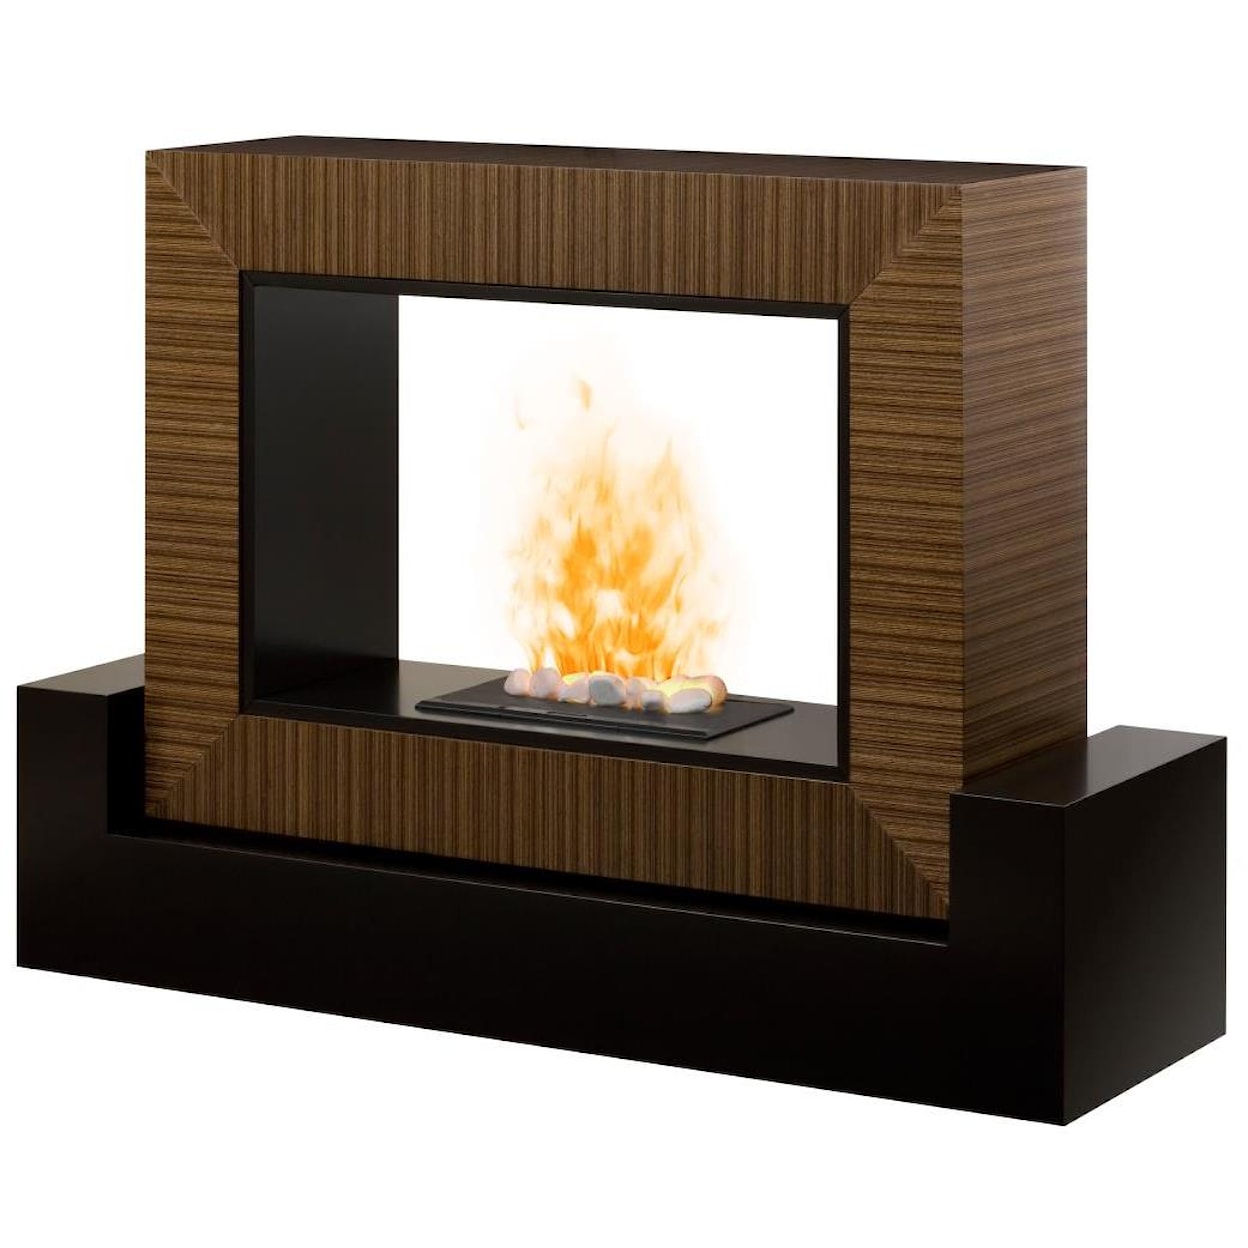 Dimplex Amsden Electric Fireplace